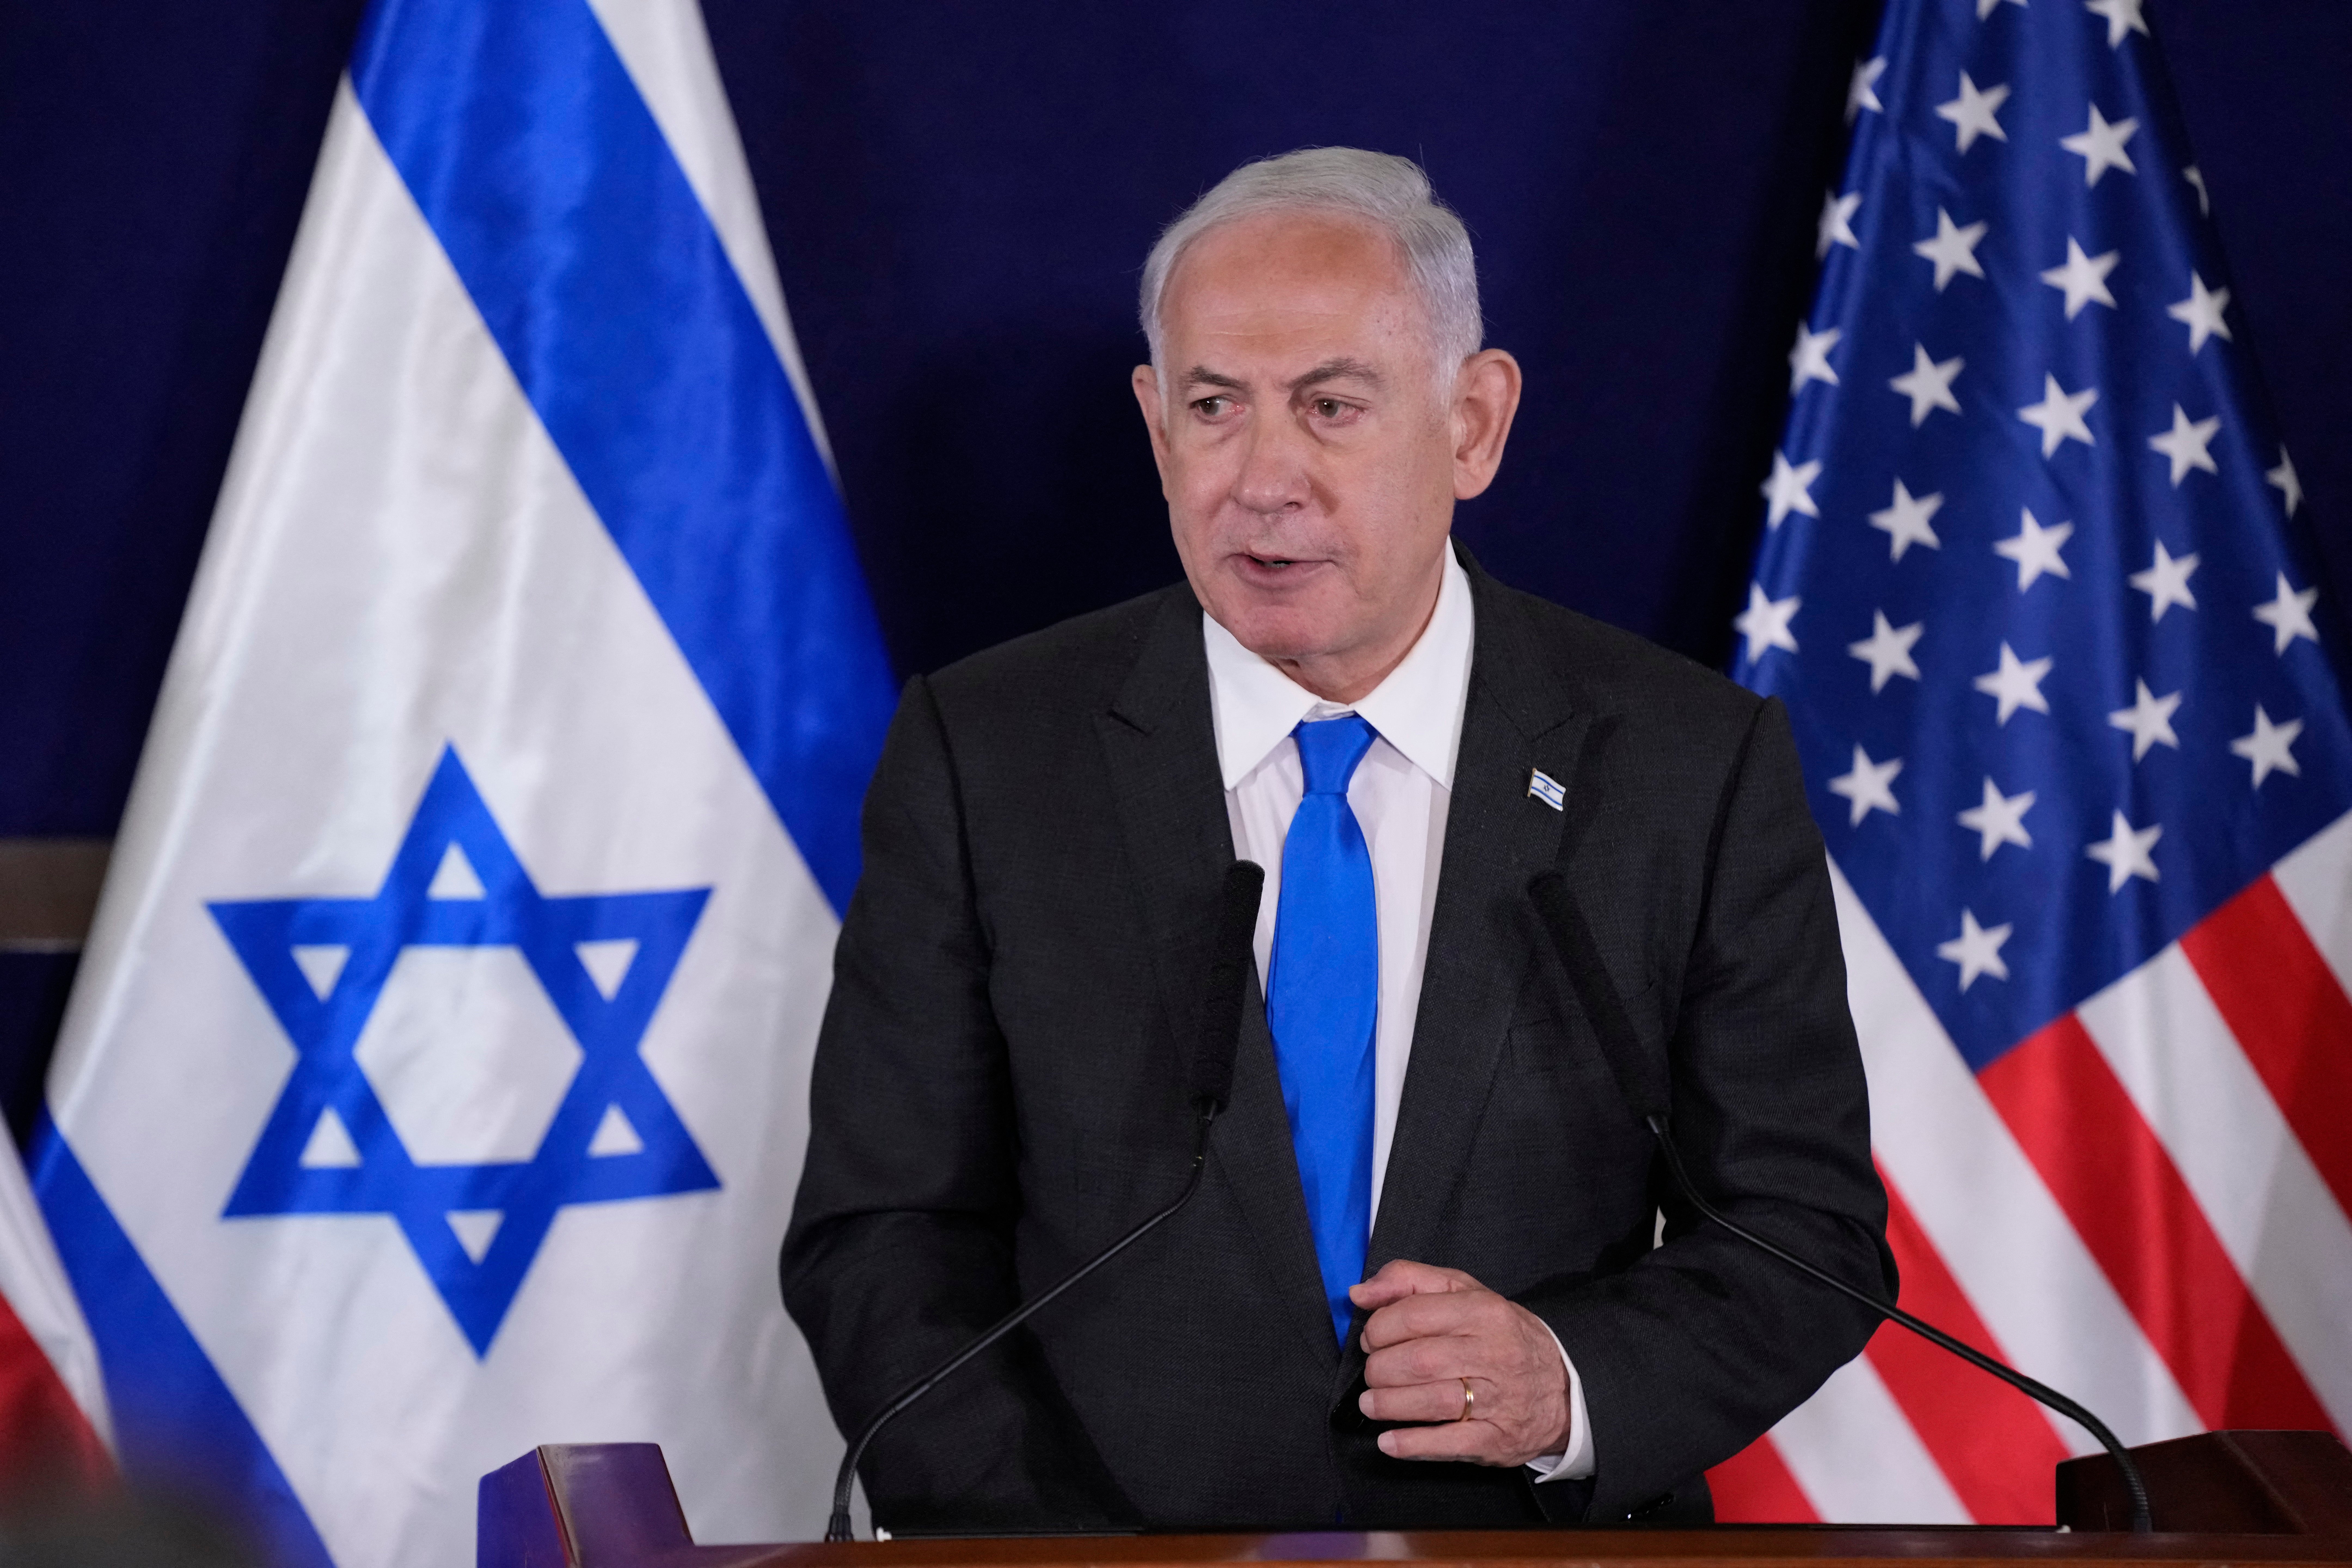 Israel’s prime minister Benjamin Netanyahu spoke with GOP senators on Wednesday afternoon